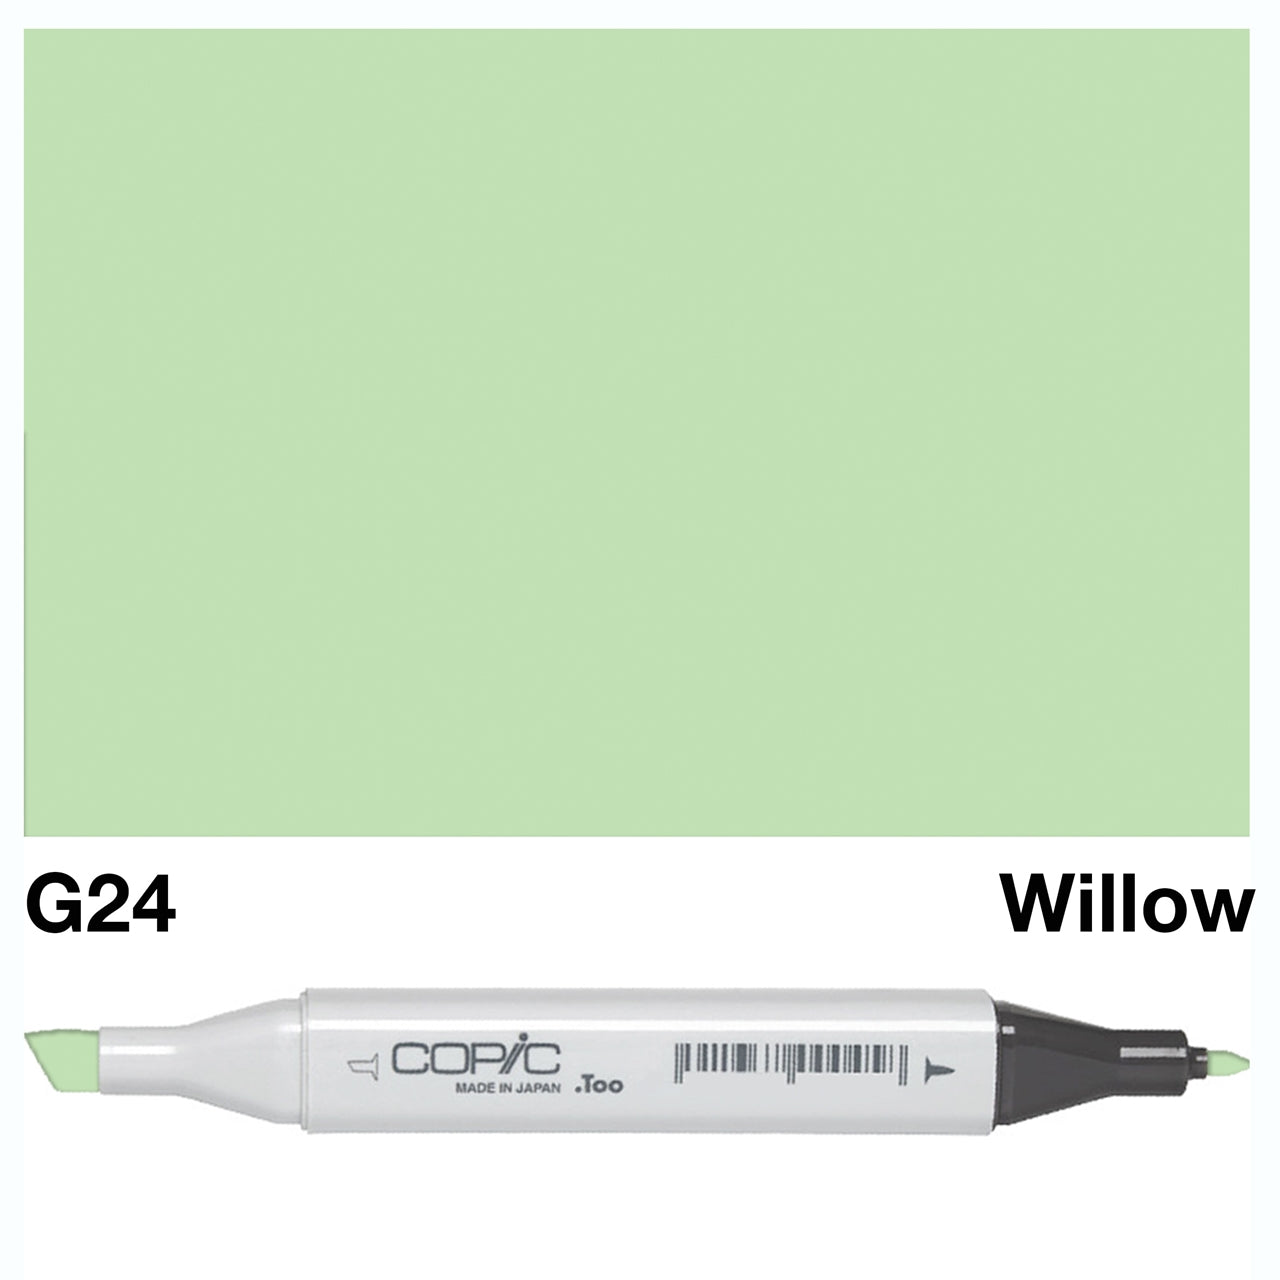 Copic Classic Marker G24 Willow - theartshop.com.au